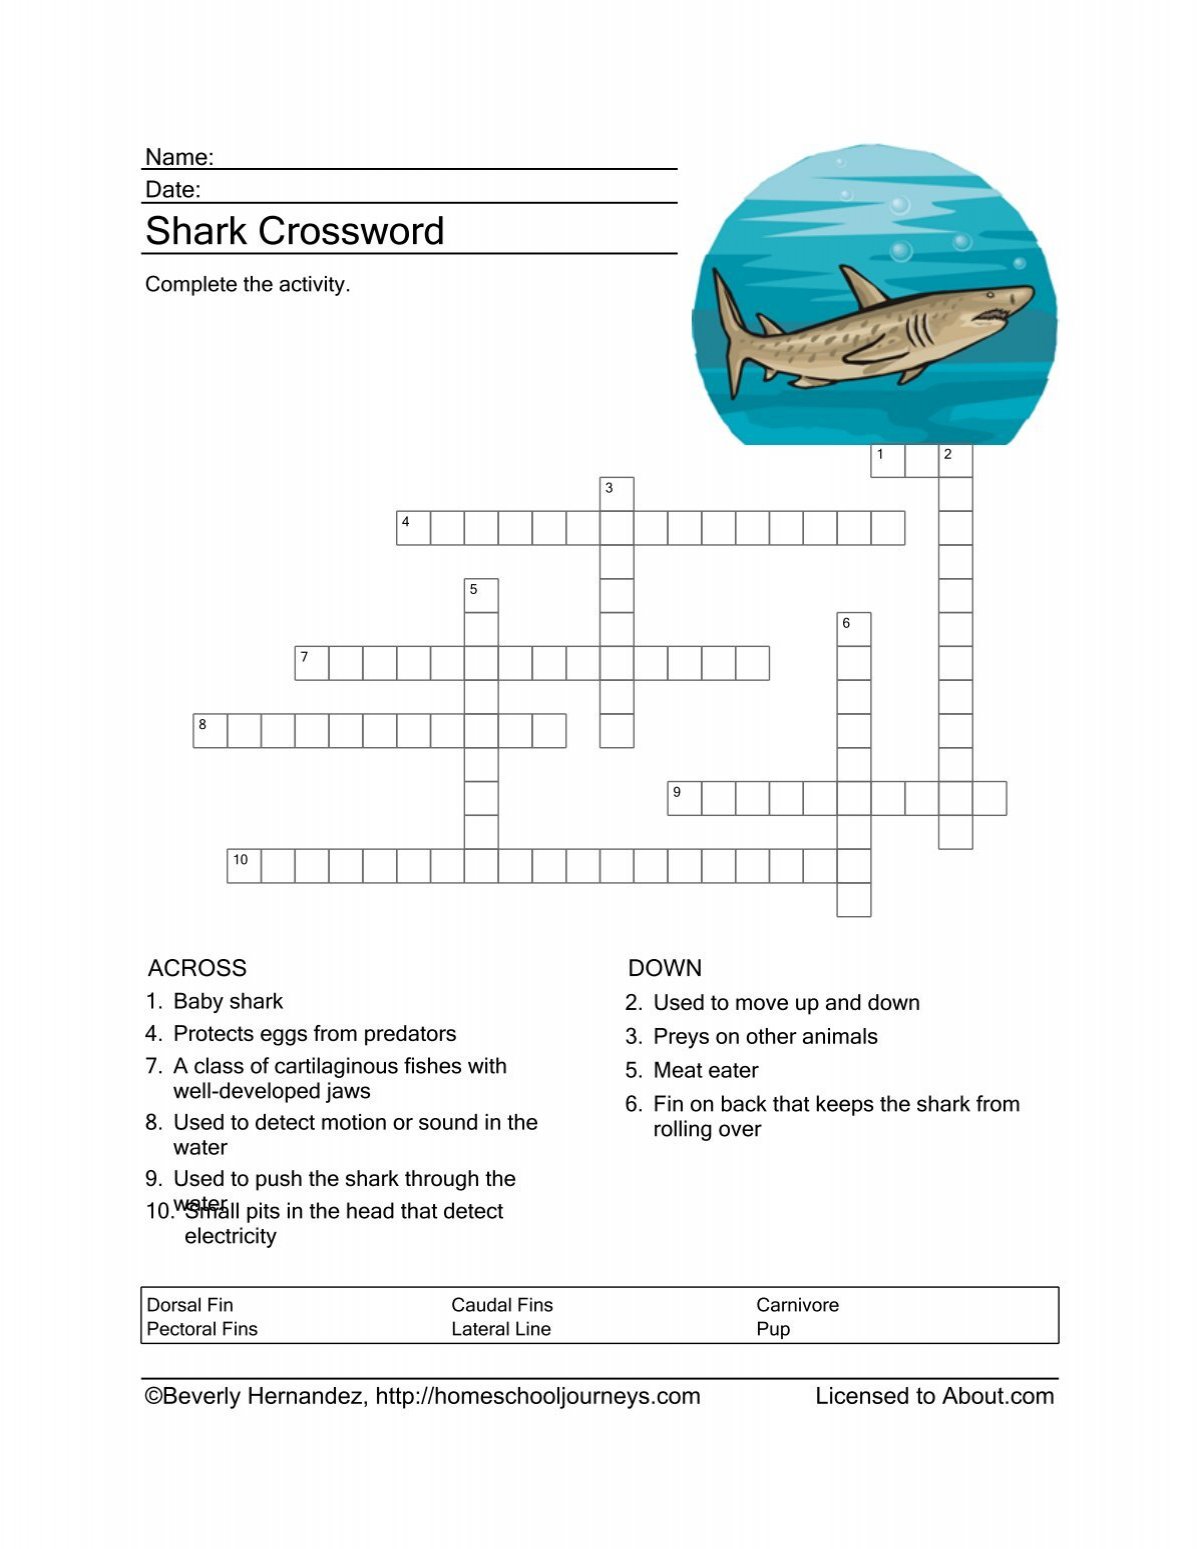 Shark Crossword Puzzle Homeschooling About com